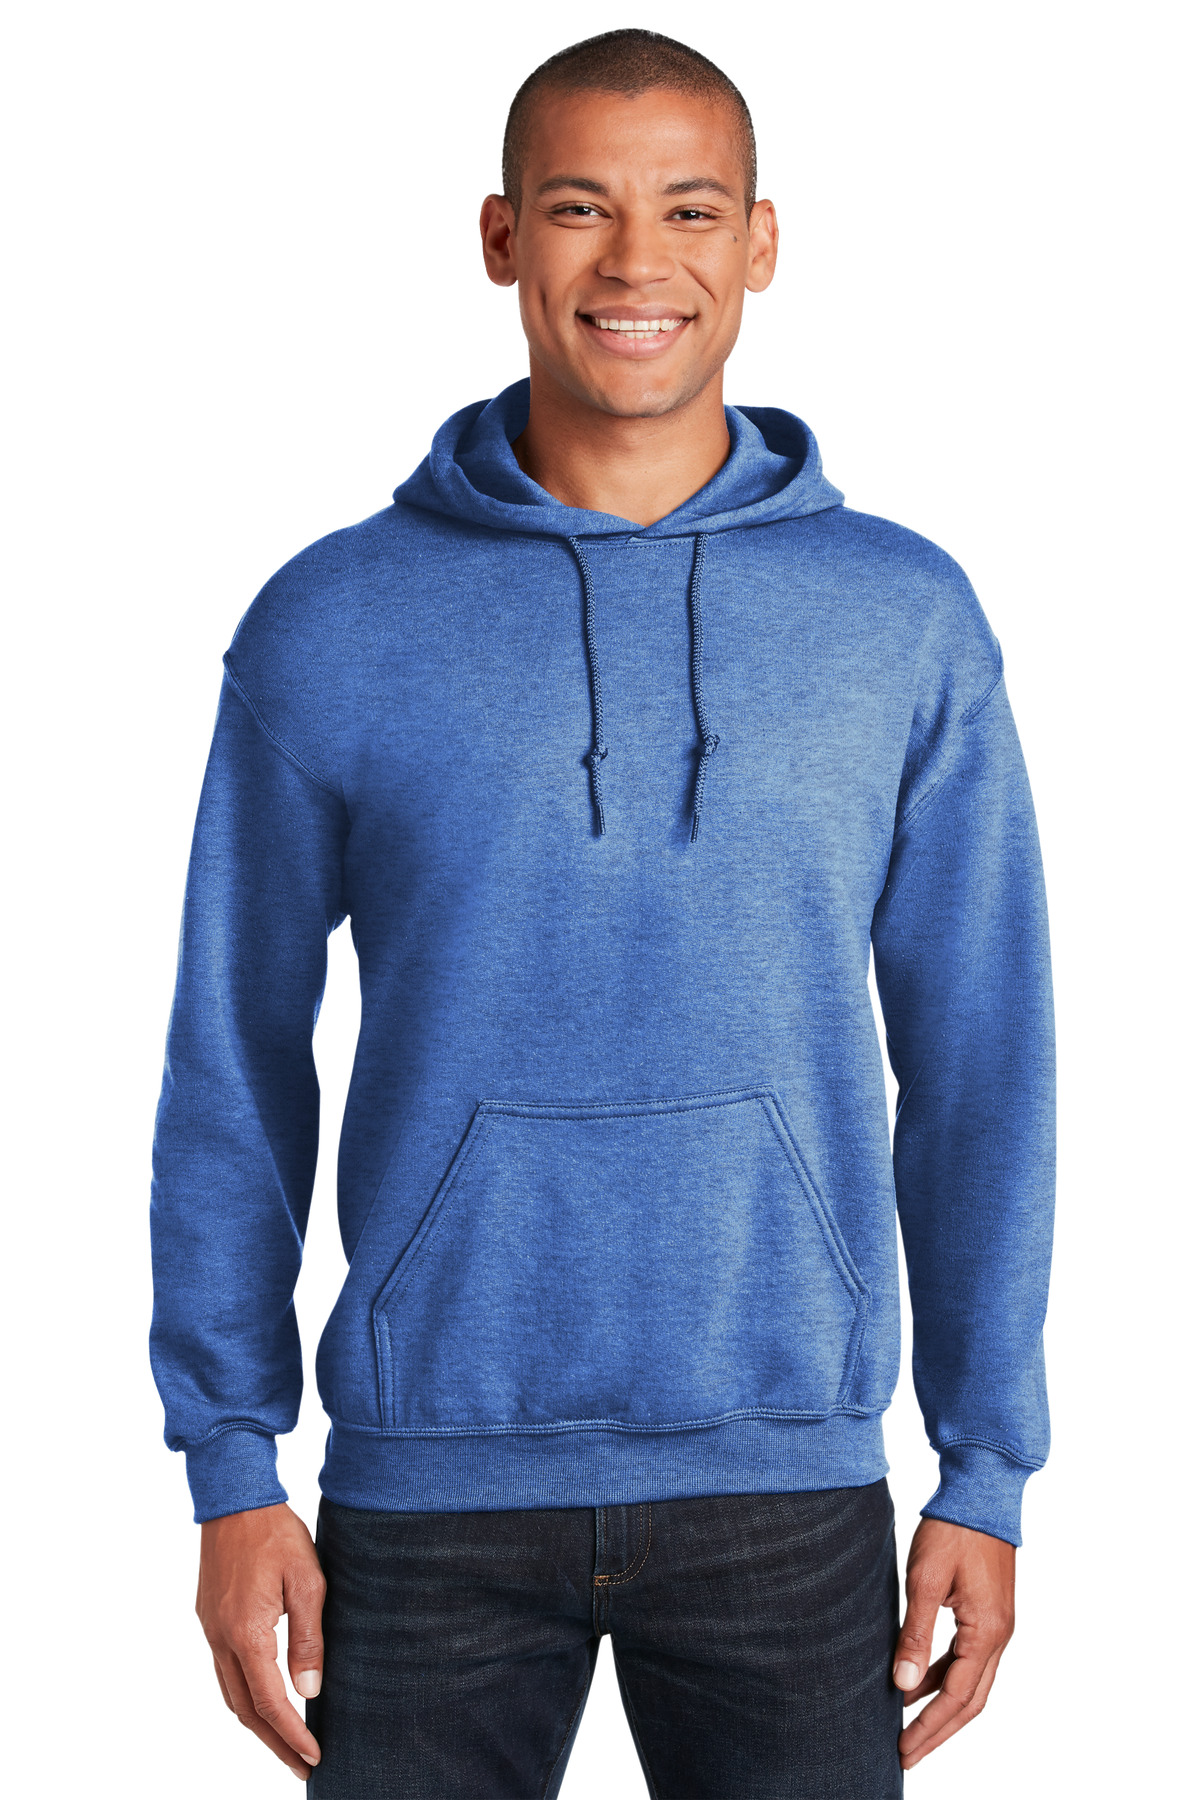 https://images.shirtspace.com/fullsize/9ZQCSzS7PPxXkNdrzOoKug%3D%3D/399968/1221-gildan-g185-heavy-blend-hooded-sweatshirt-front-heather-sport-royal.jpg